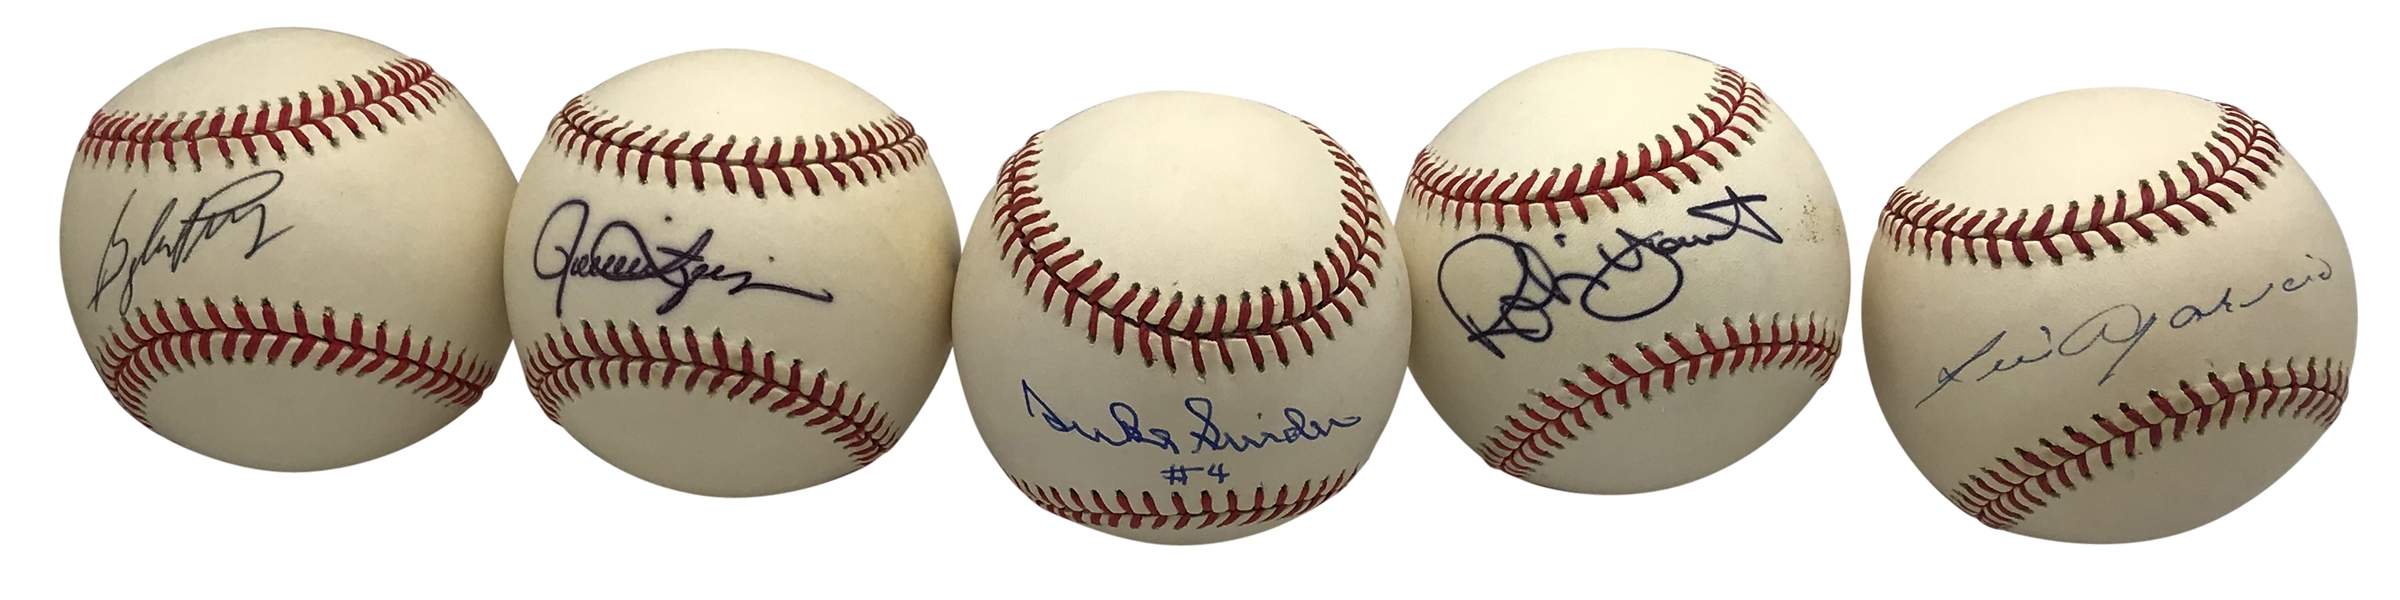 MLB Legends Lot of Ten (10) Single Signed Baseballs w/ Yount, Snider & Others (Beckett/BAS Guaranteed)